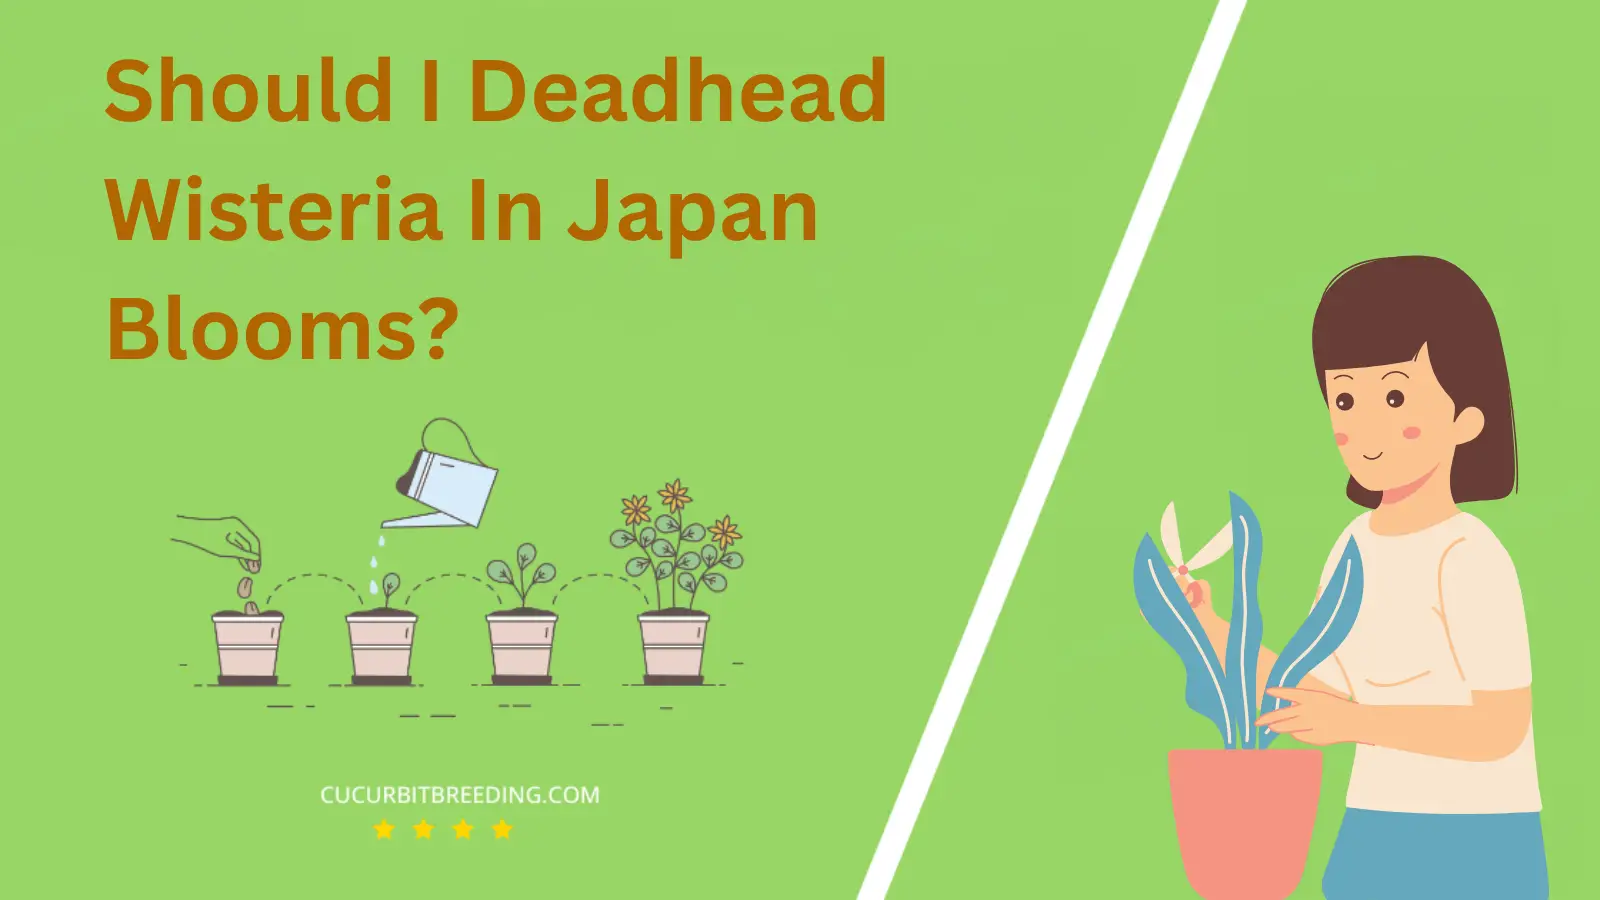 Should I Deadhead Wisteria In Japan Blooms?